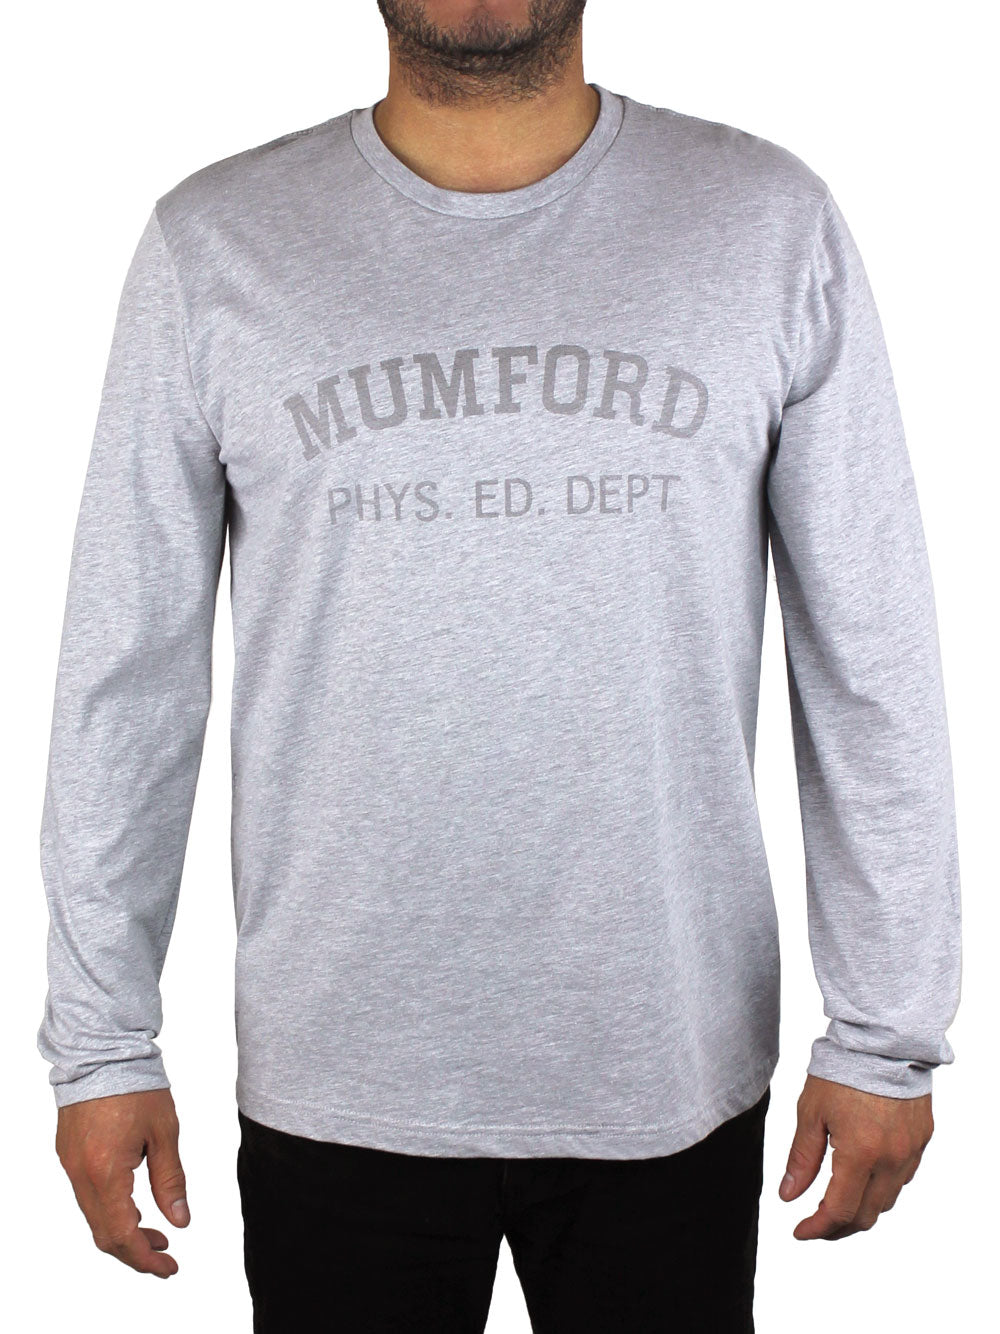 Mumford Phys. Ed. Dept. Shirt Front View